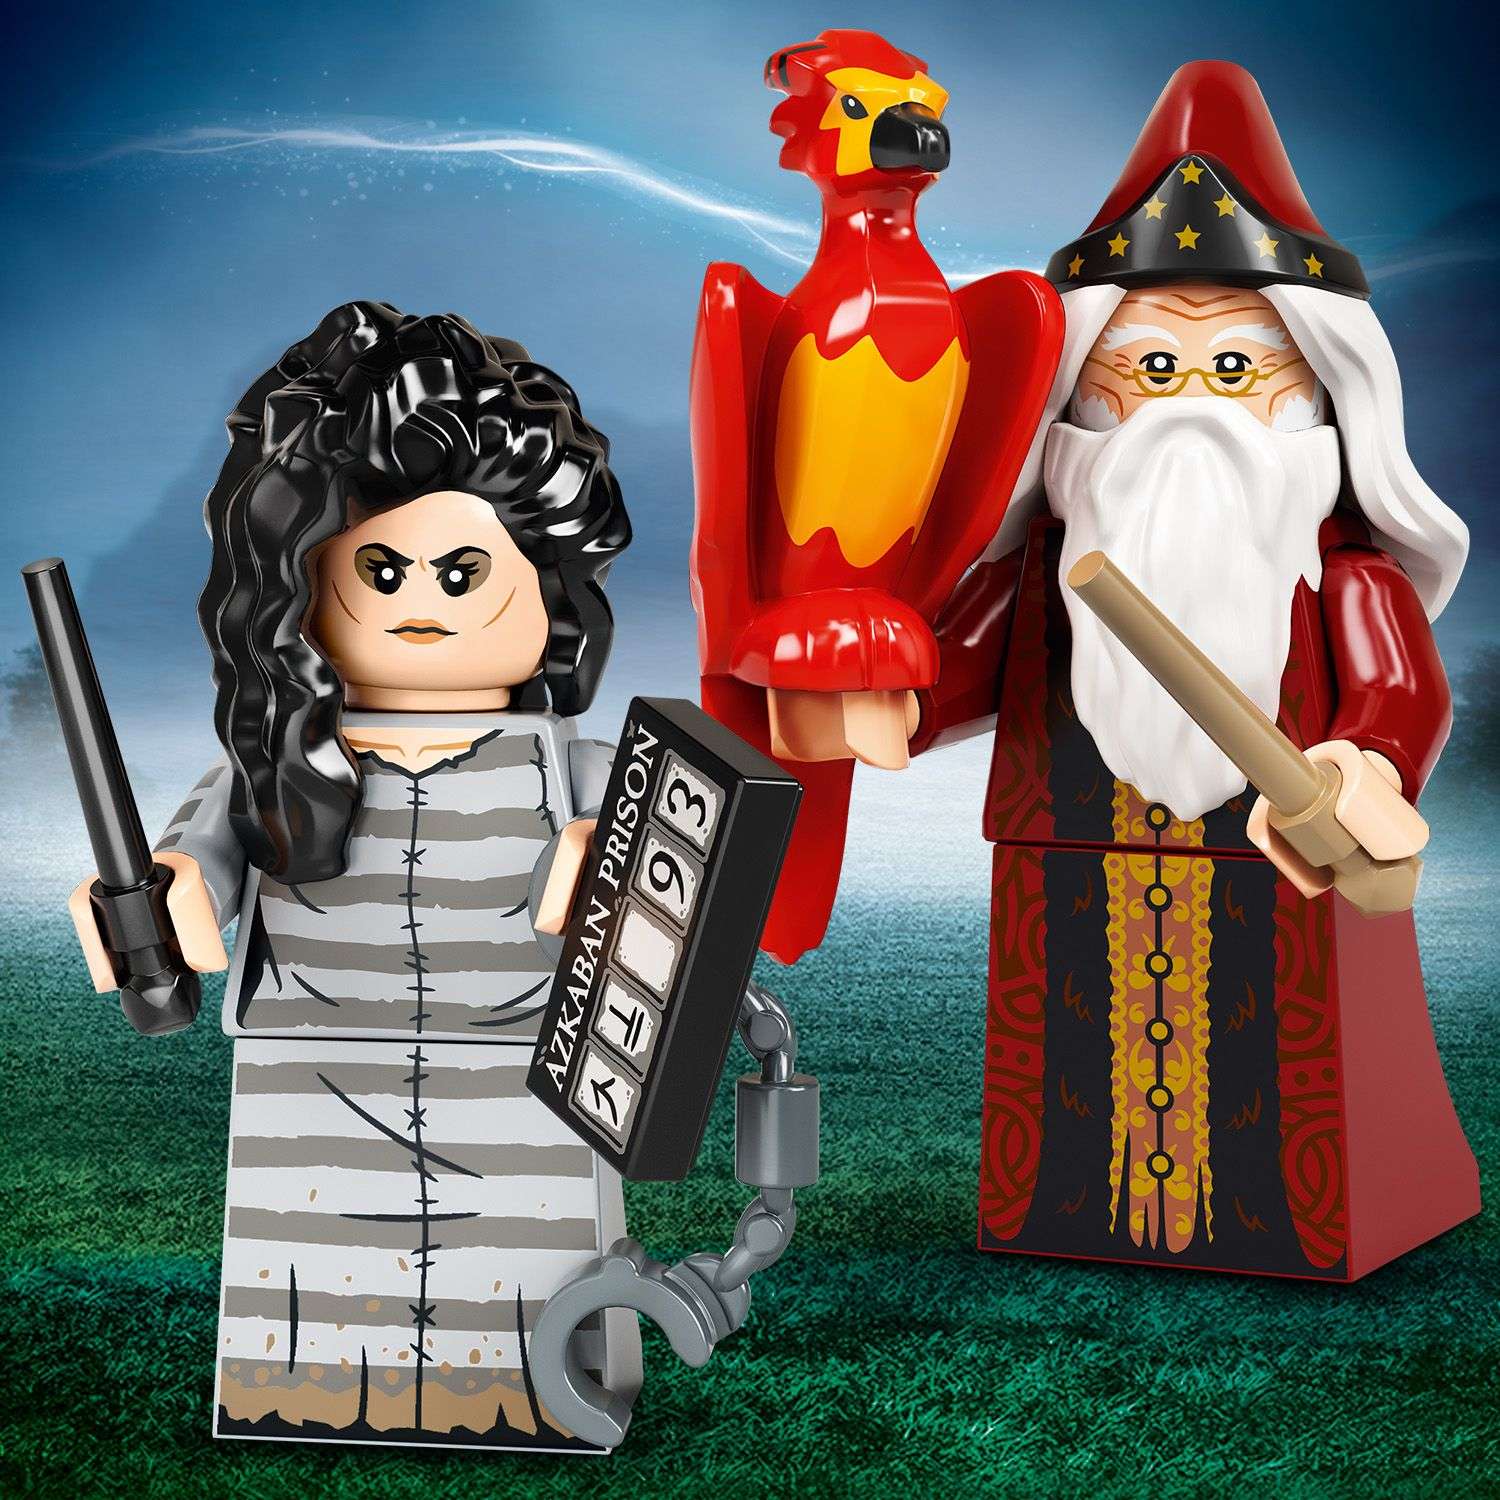 Конструктор LEGO Minifigures Harry Potter 2 71028 - фото 7